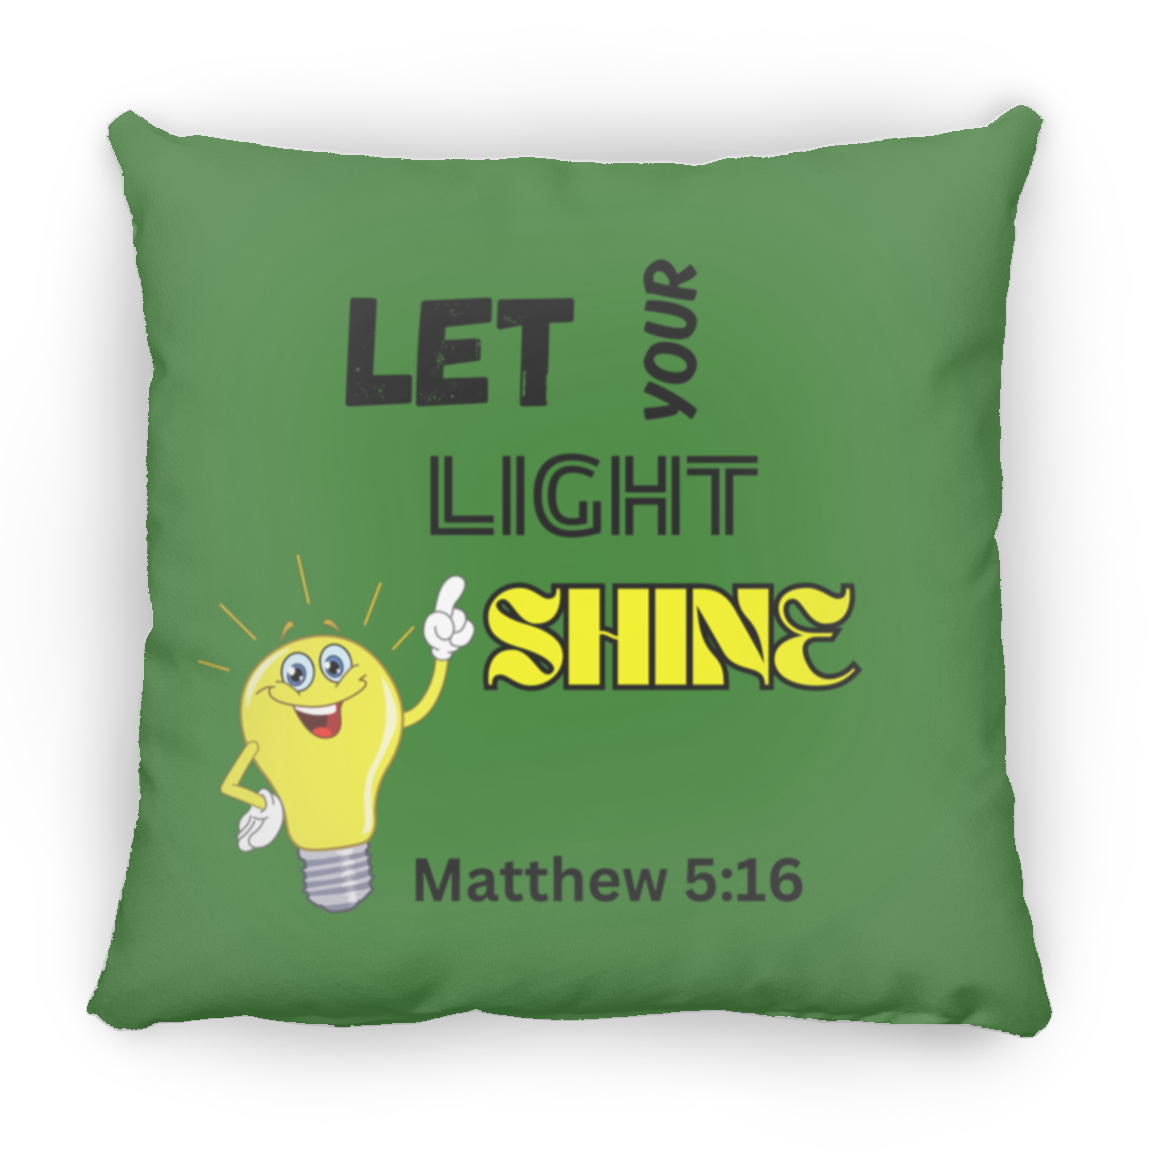 Let Your Light Shine Pillow